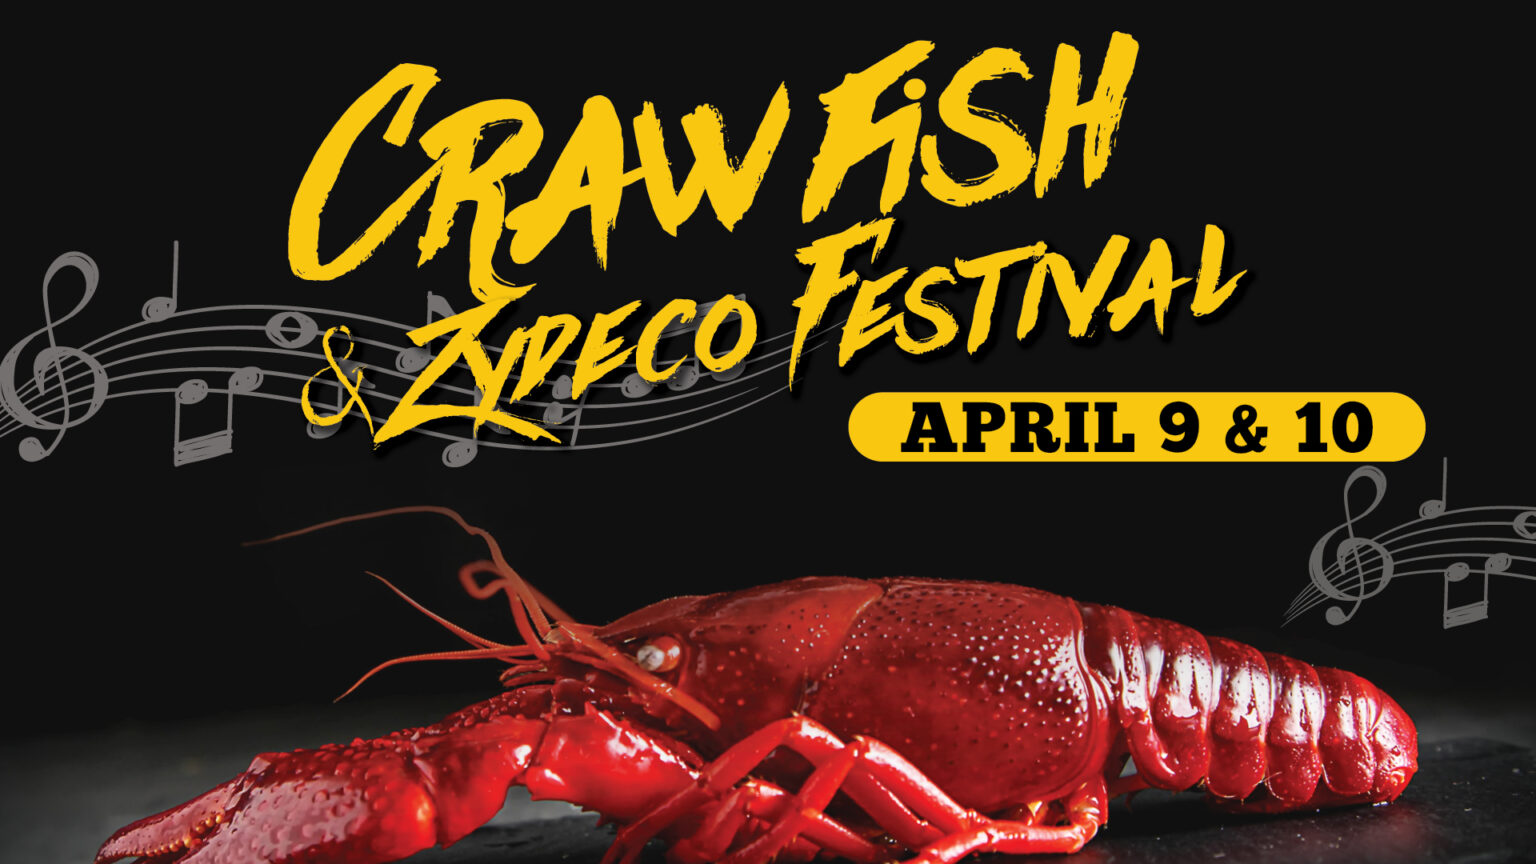 Crawfish & Zydeco Festival Visit Greater Houston